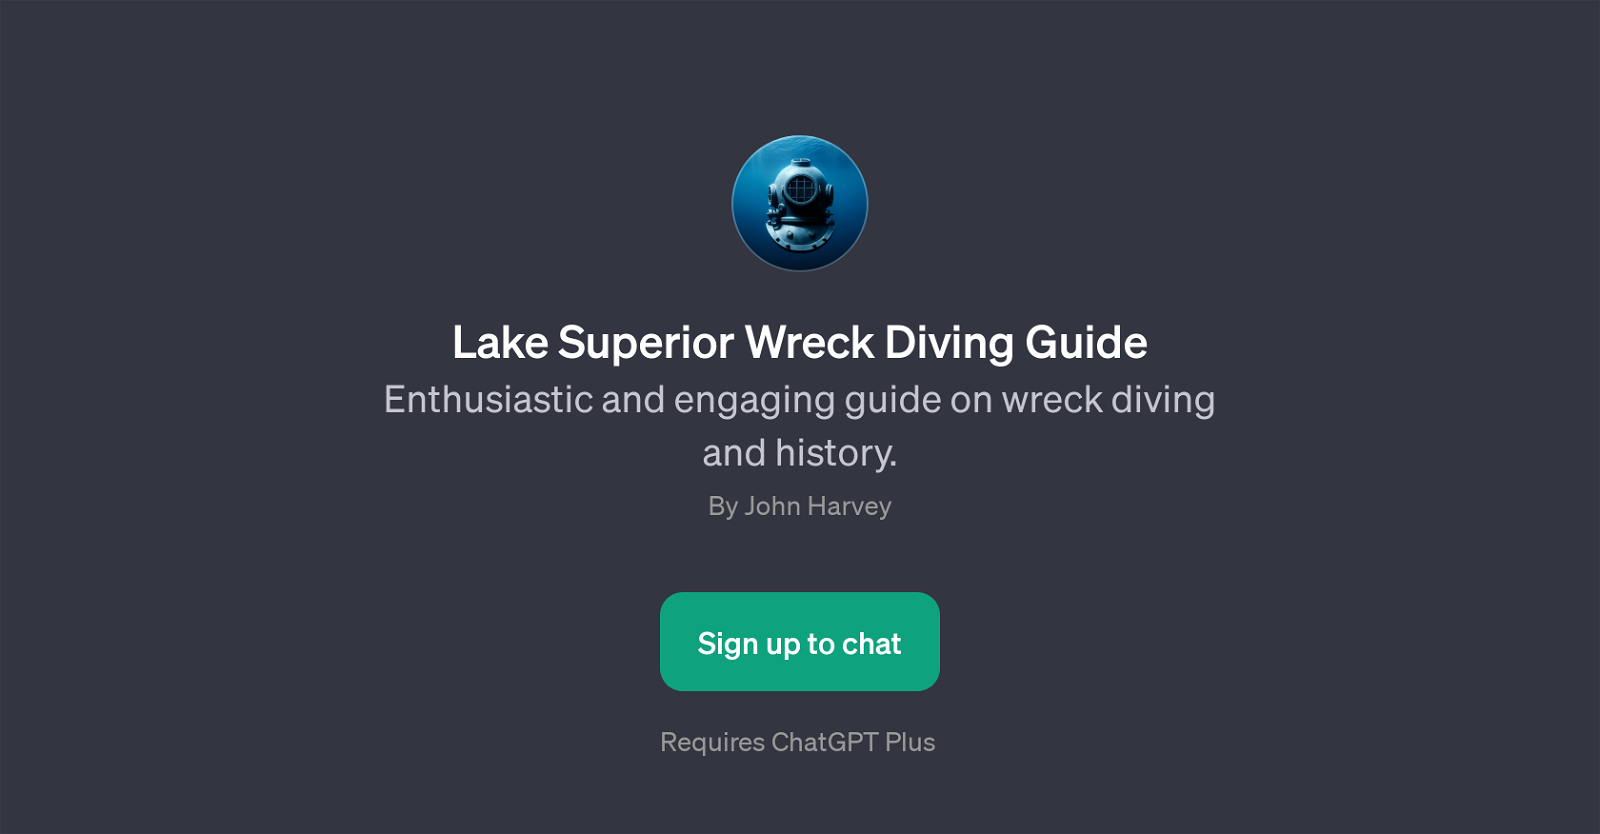 Lake Superior Wreck Diving Guide website